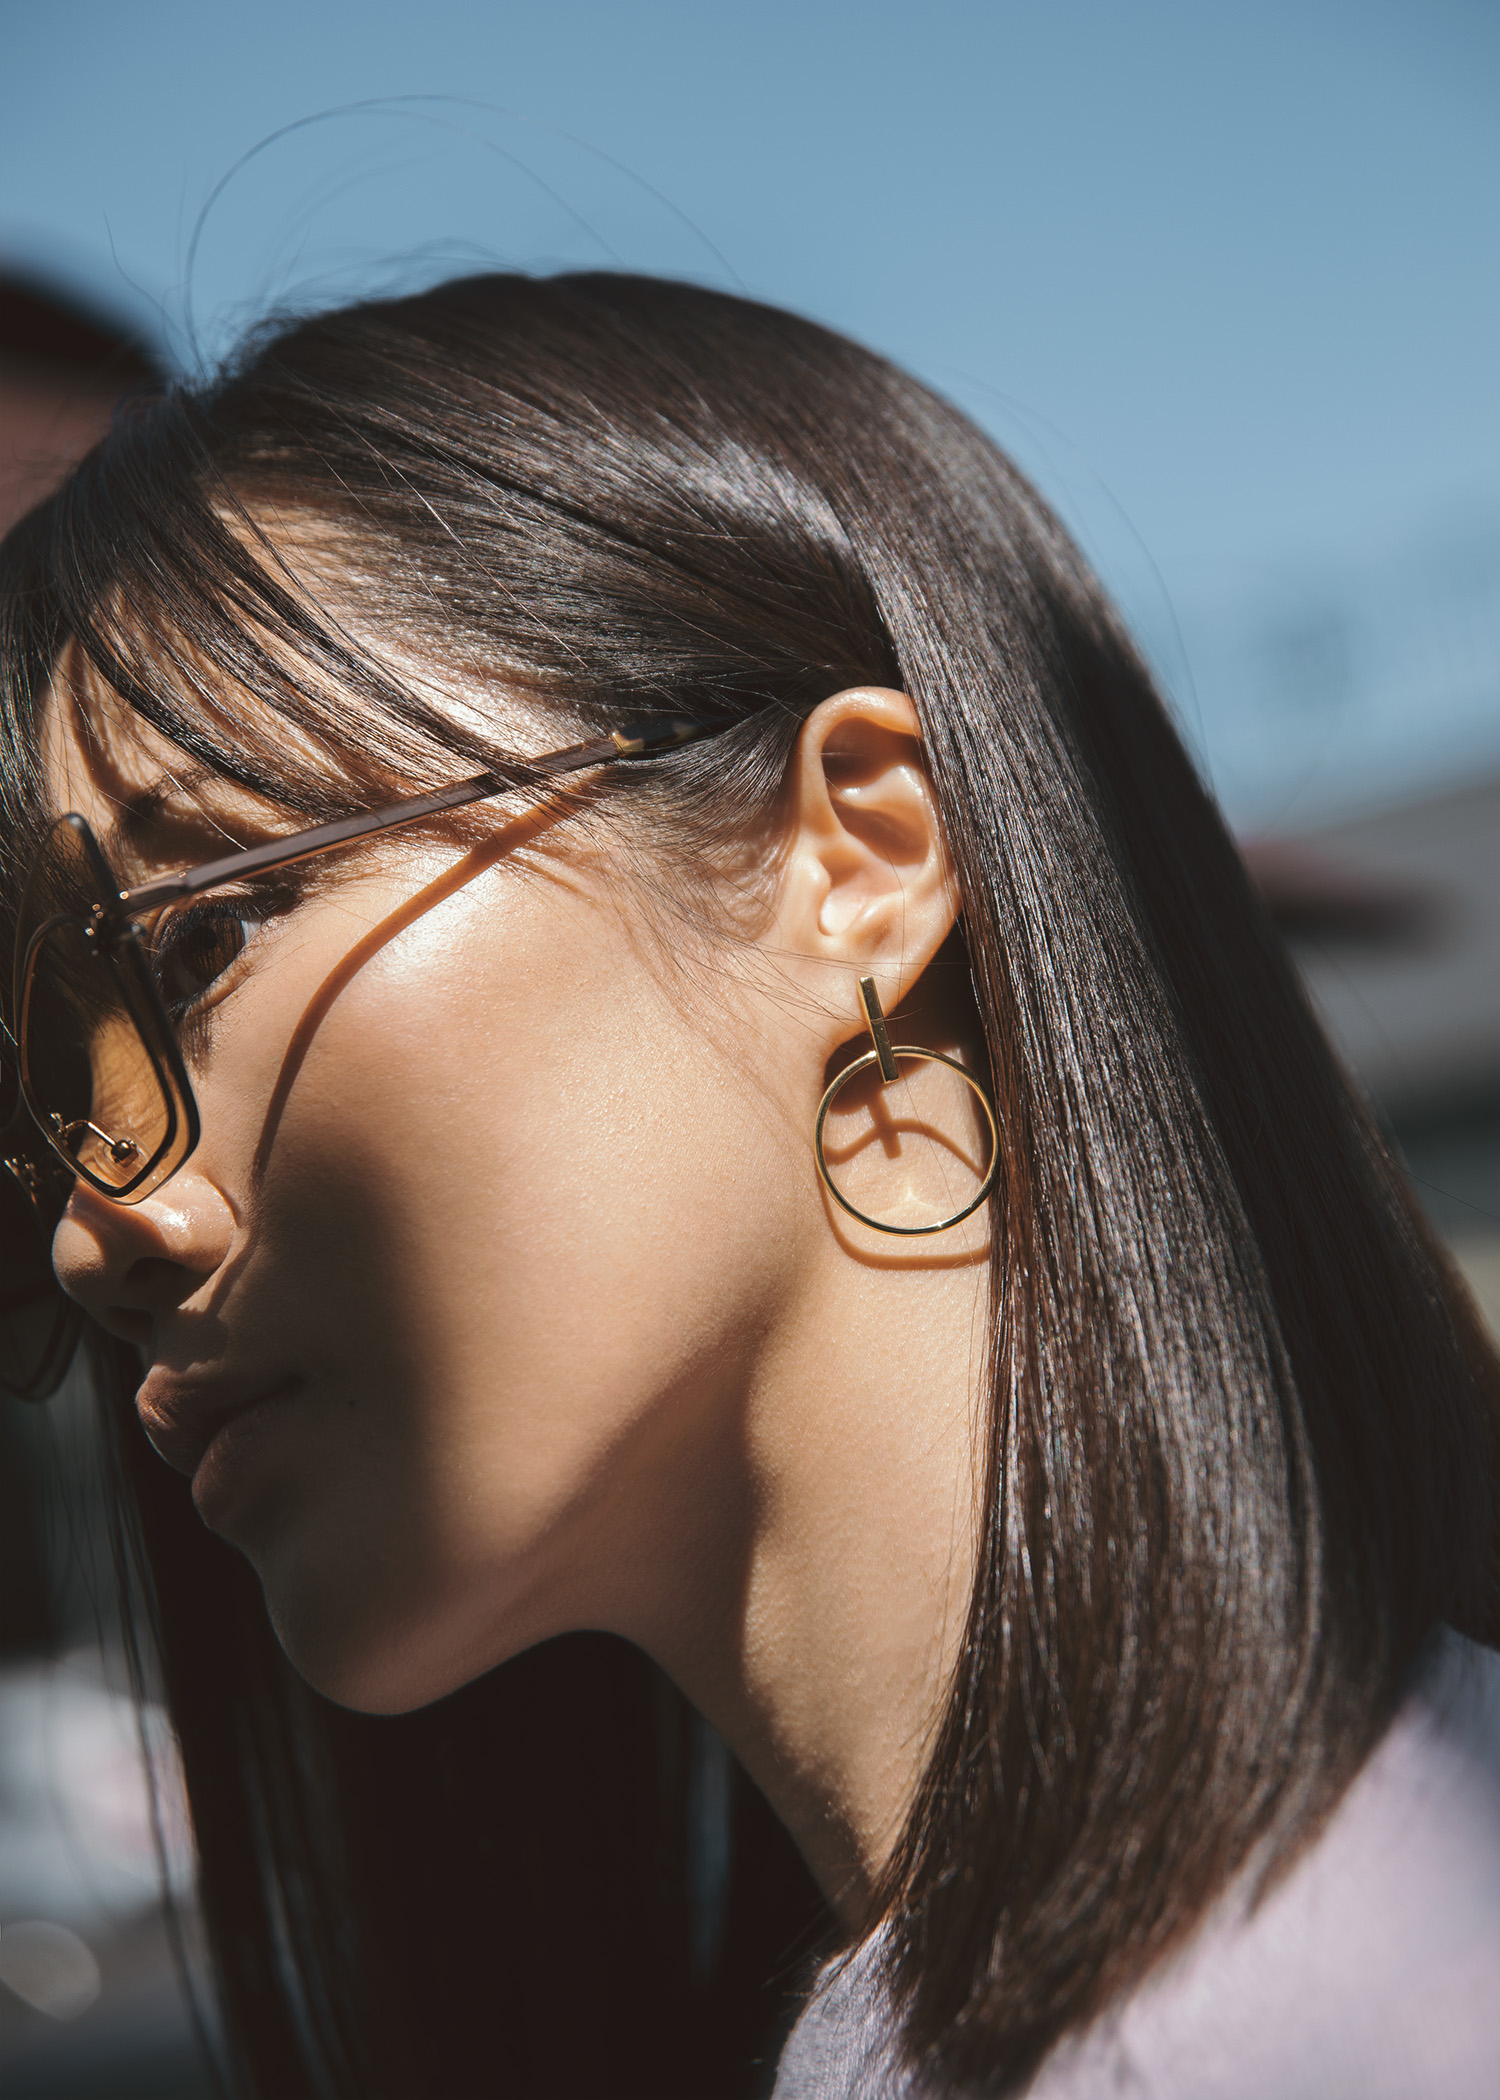 Top earring trends minimal gold earrings